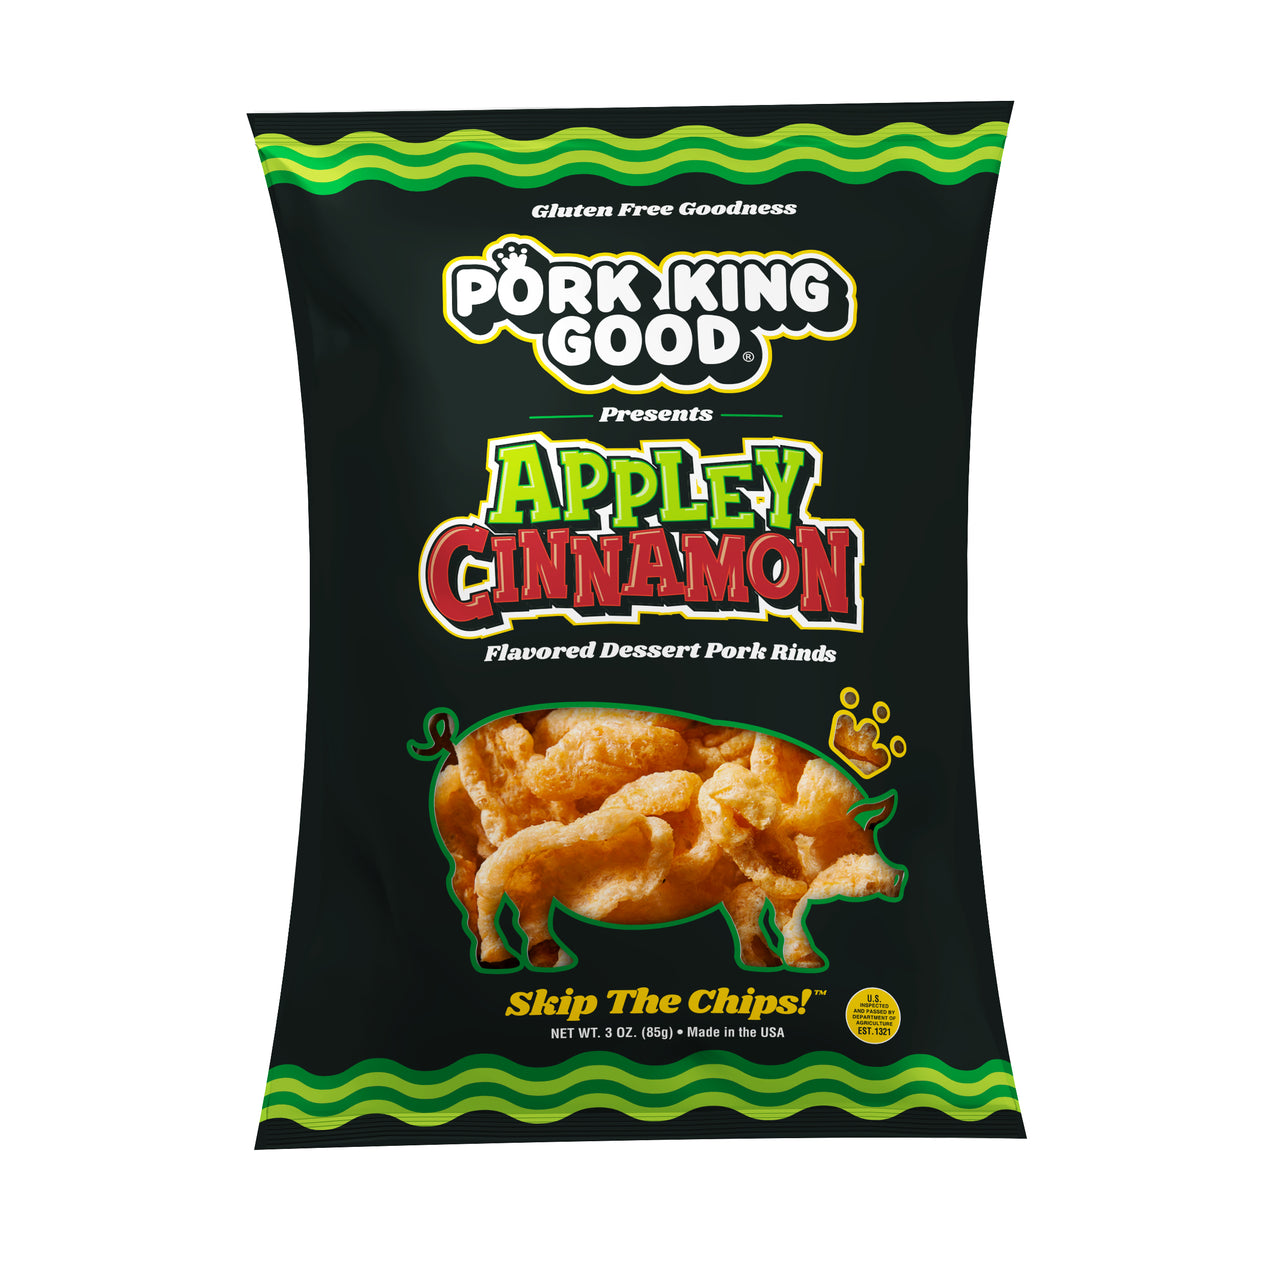 Pork King Good Appley Cinnamon Pork Rinds - 3 oz